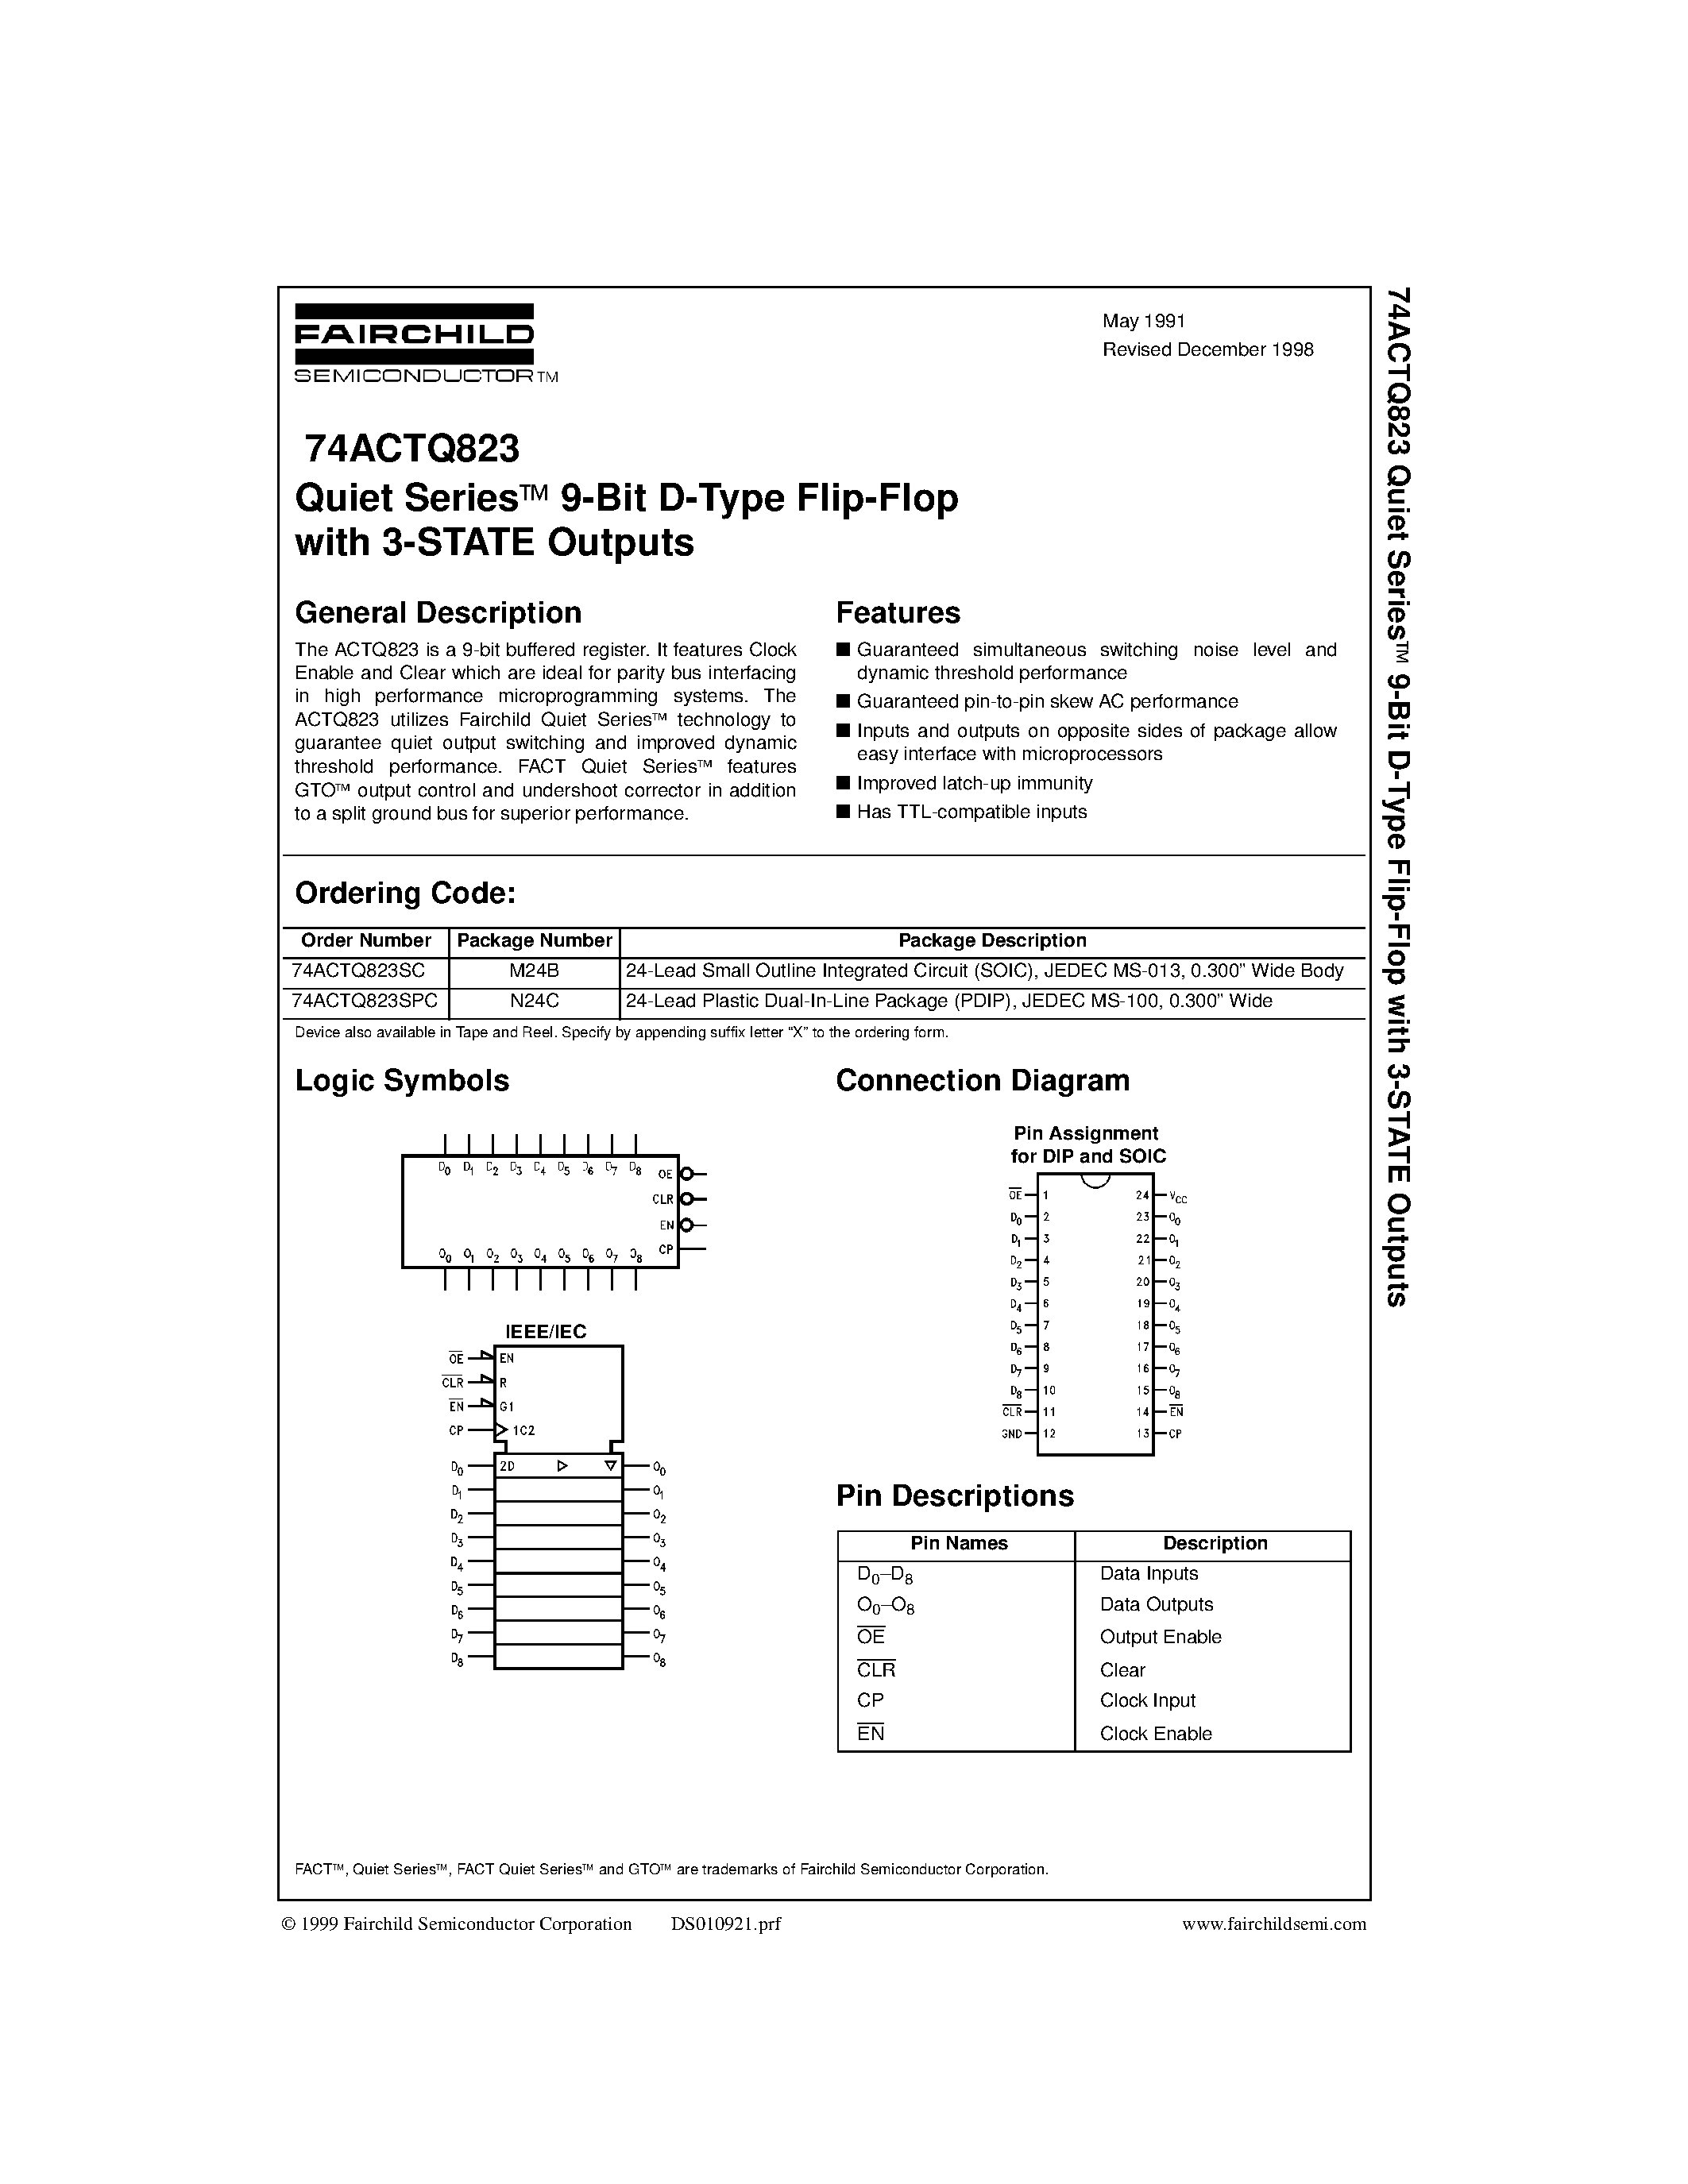 Datasheet 74ACTQ823SC - Quiet Seriesa 9-Bit D-Type Flip-Flop with 3-STATE Outputs page 1